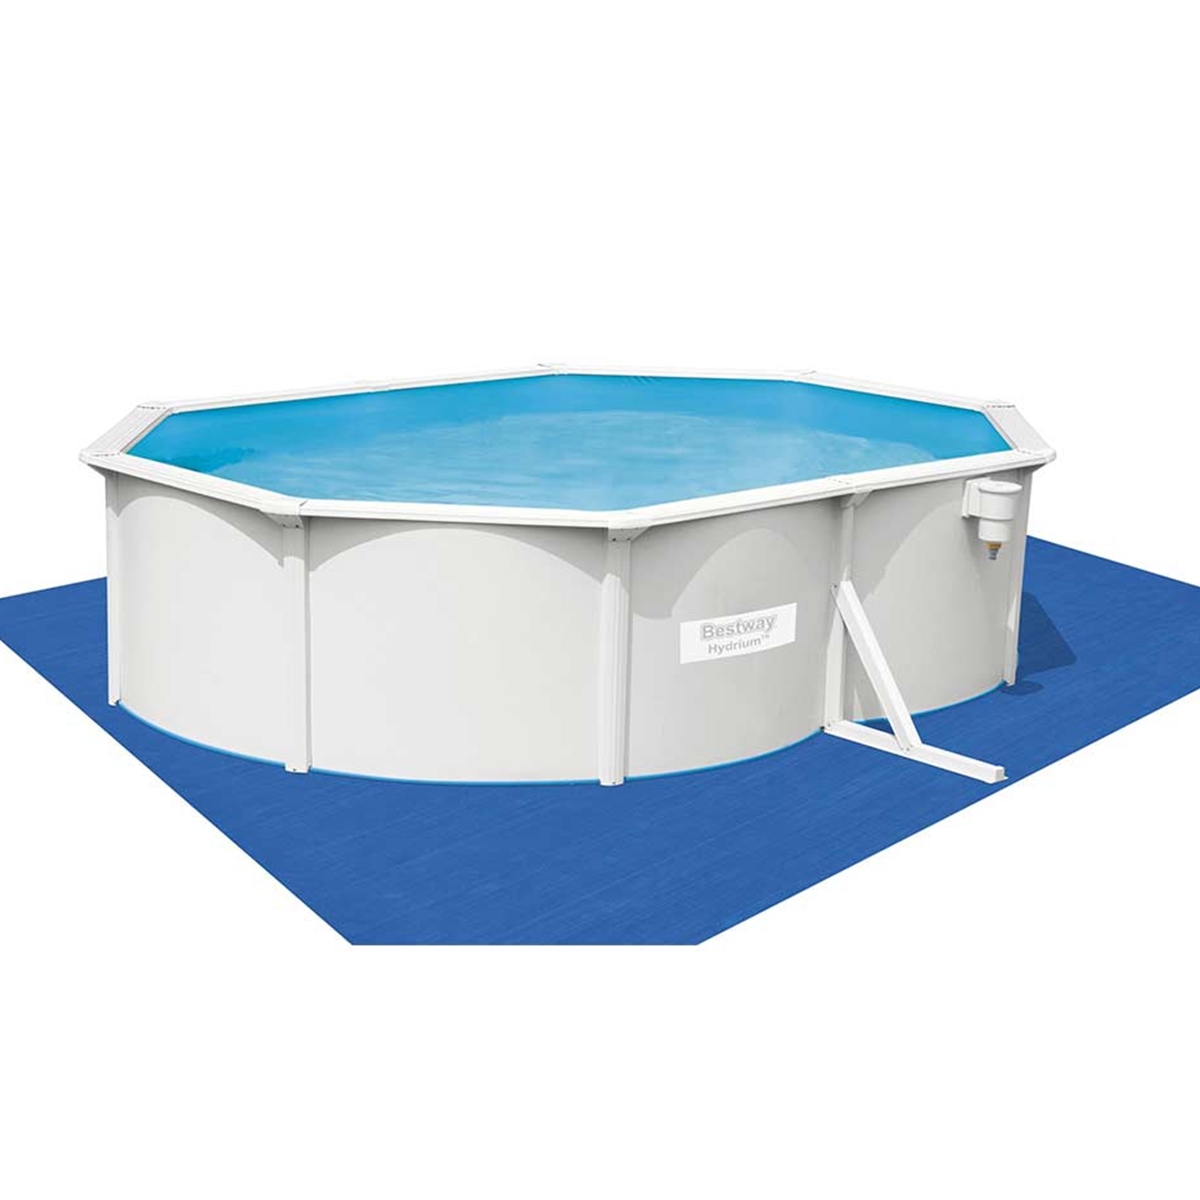 Piscinas e jardim Bestway - Bestway Hydrium piscina oval em aço Ø 500 x 360 x 120 cm